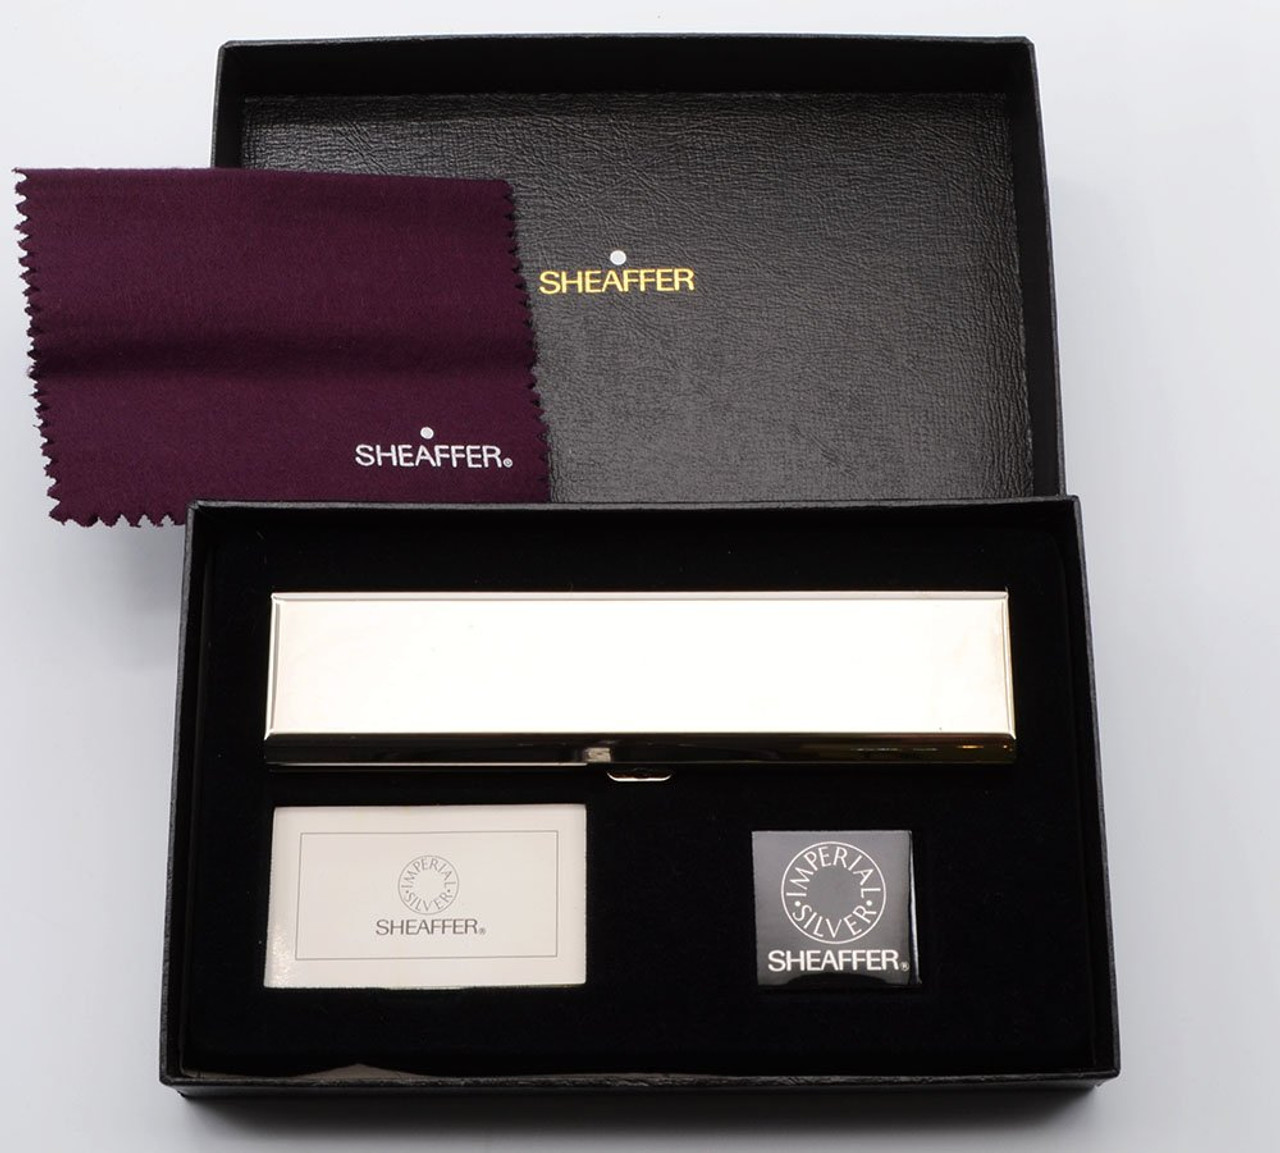 Sheaffer TARGA 1024x Ballpoint Pen (1980s/90s) - Sterling Silver, Gold Trim, Silverplated Pen Case (New Old Stock, in Box)